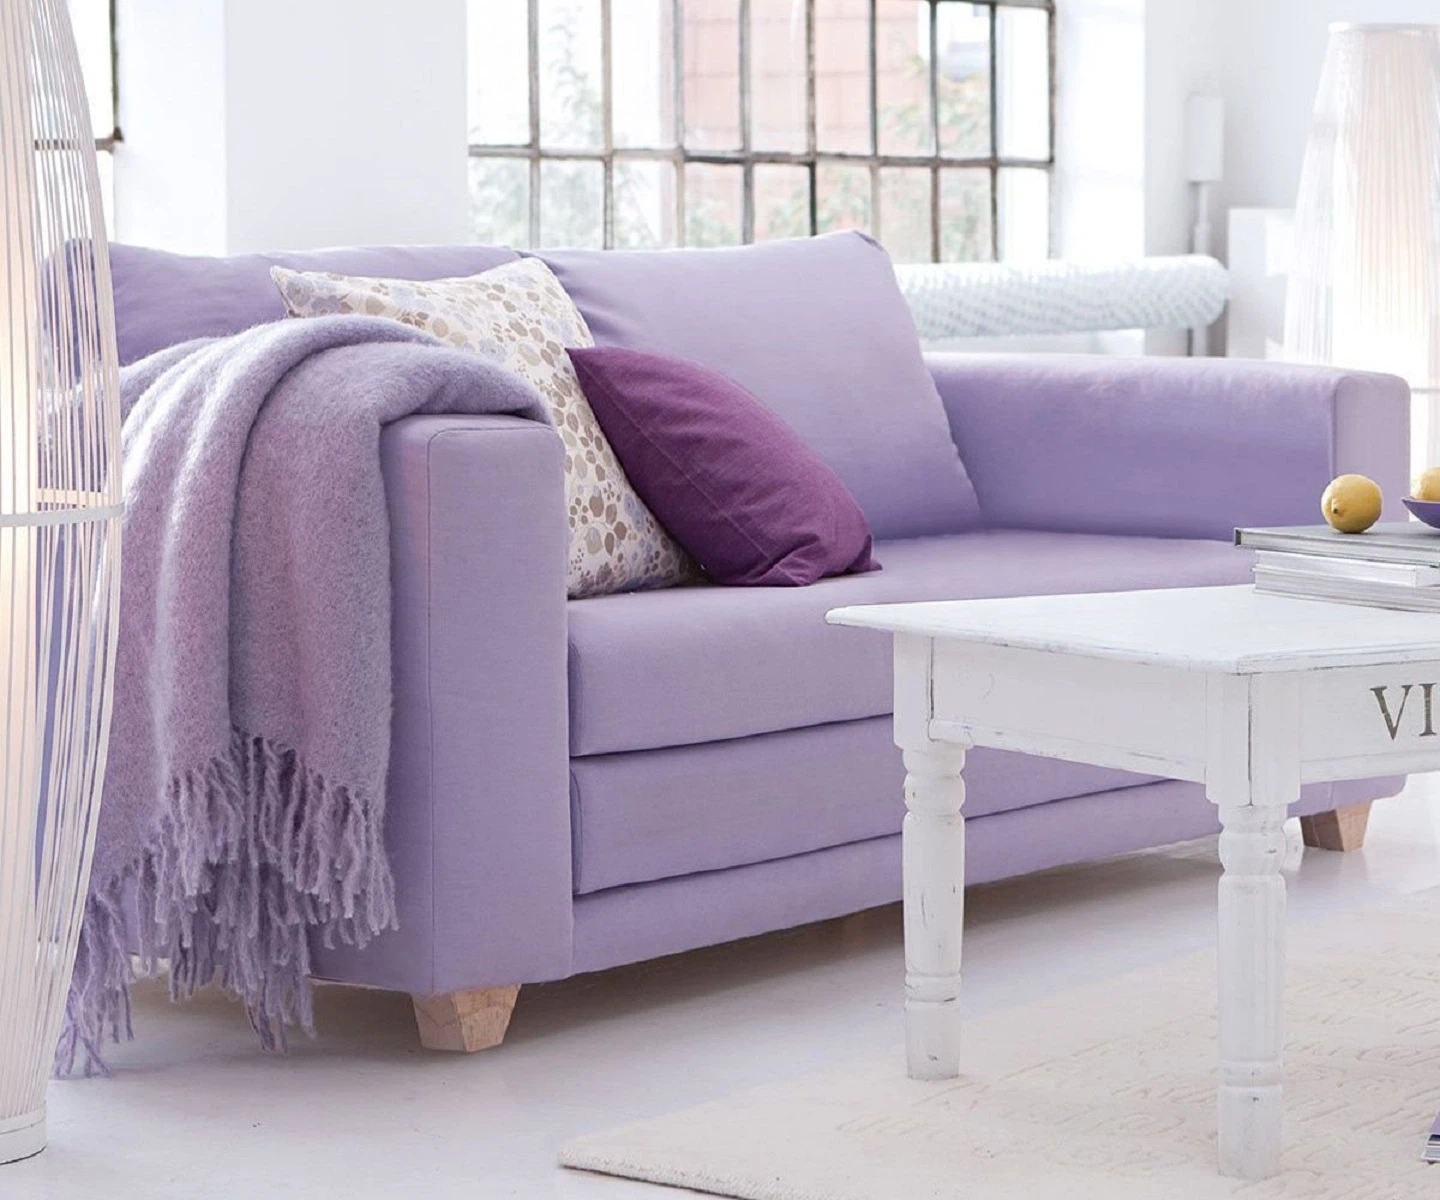 6. Misty Lavender: Tranquil Luxury